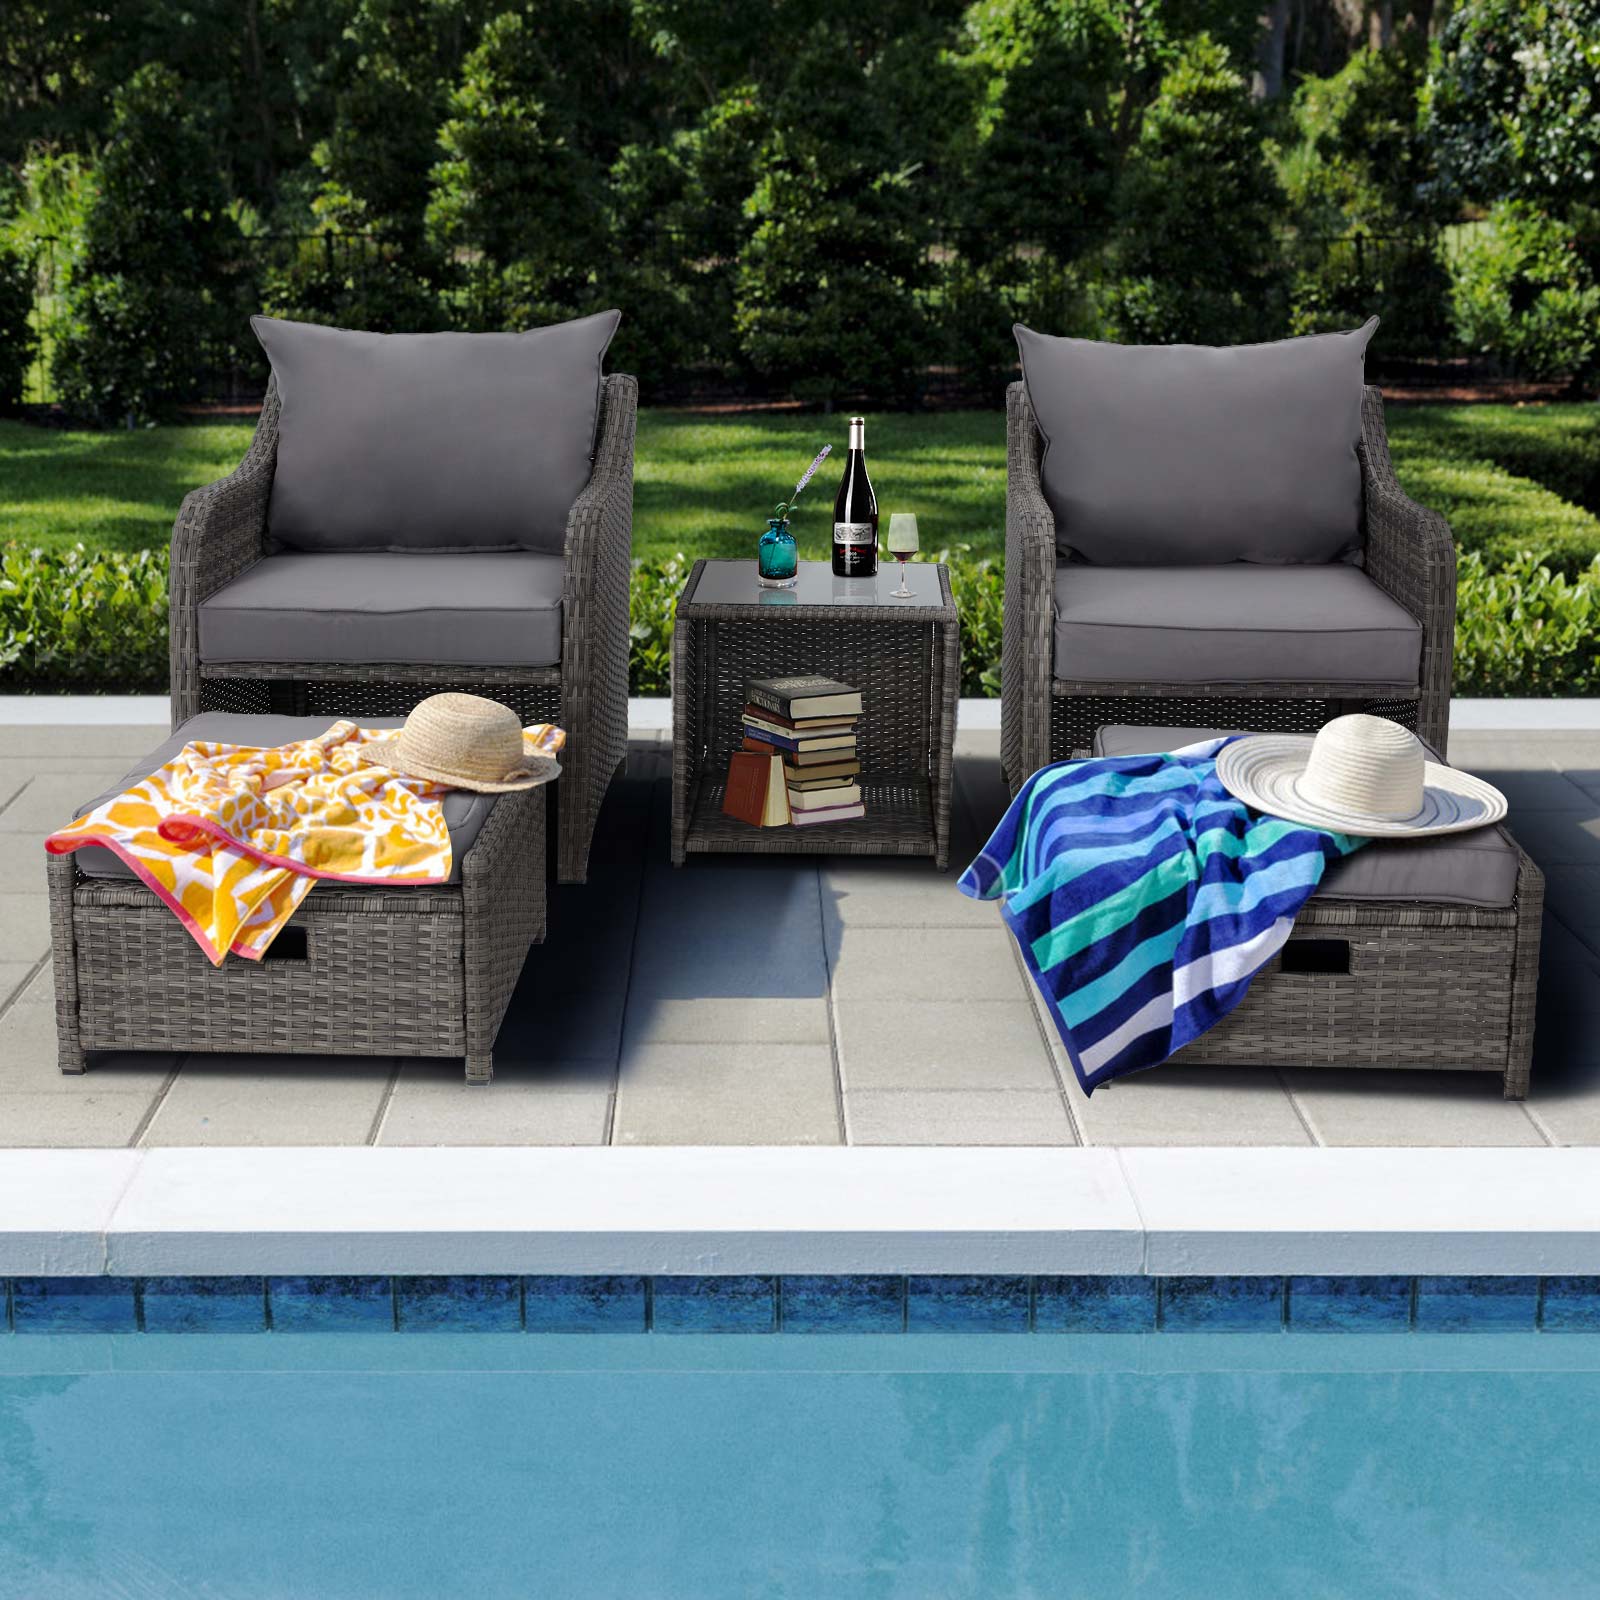 5-pieces-outdoor-wicker-furniture-patio-chair-rattan-conversation-set